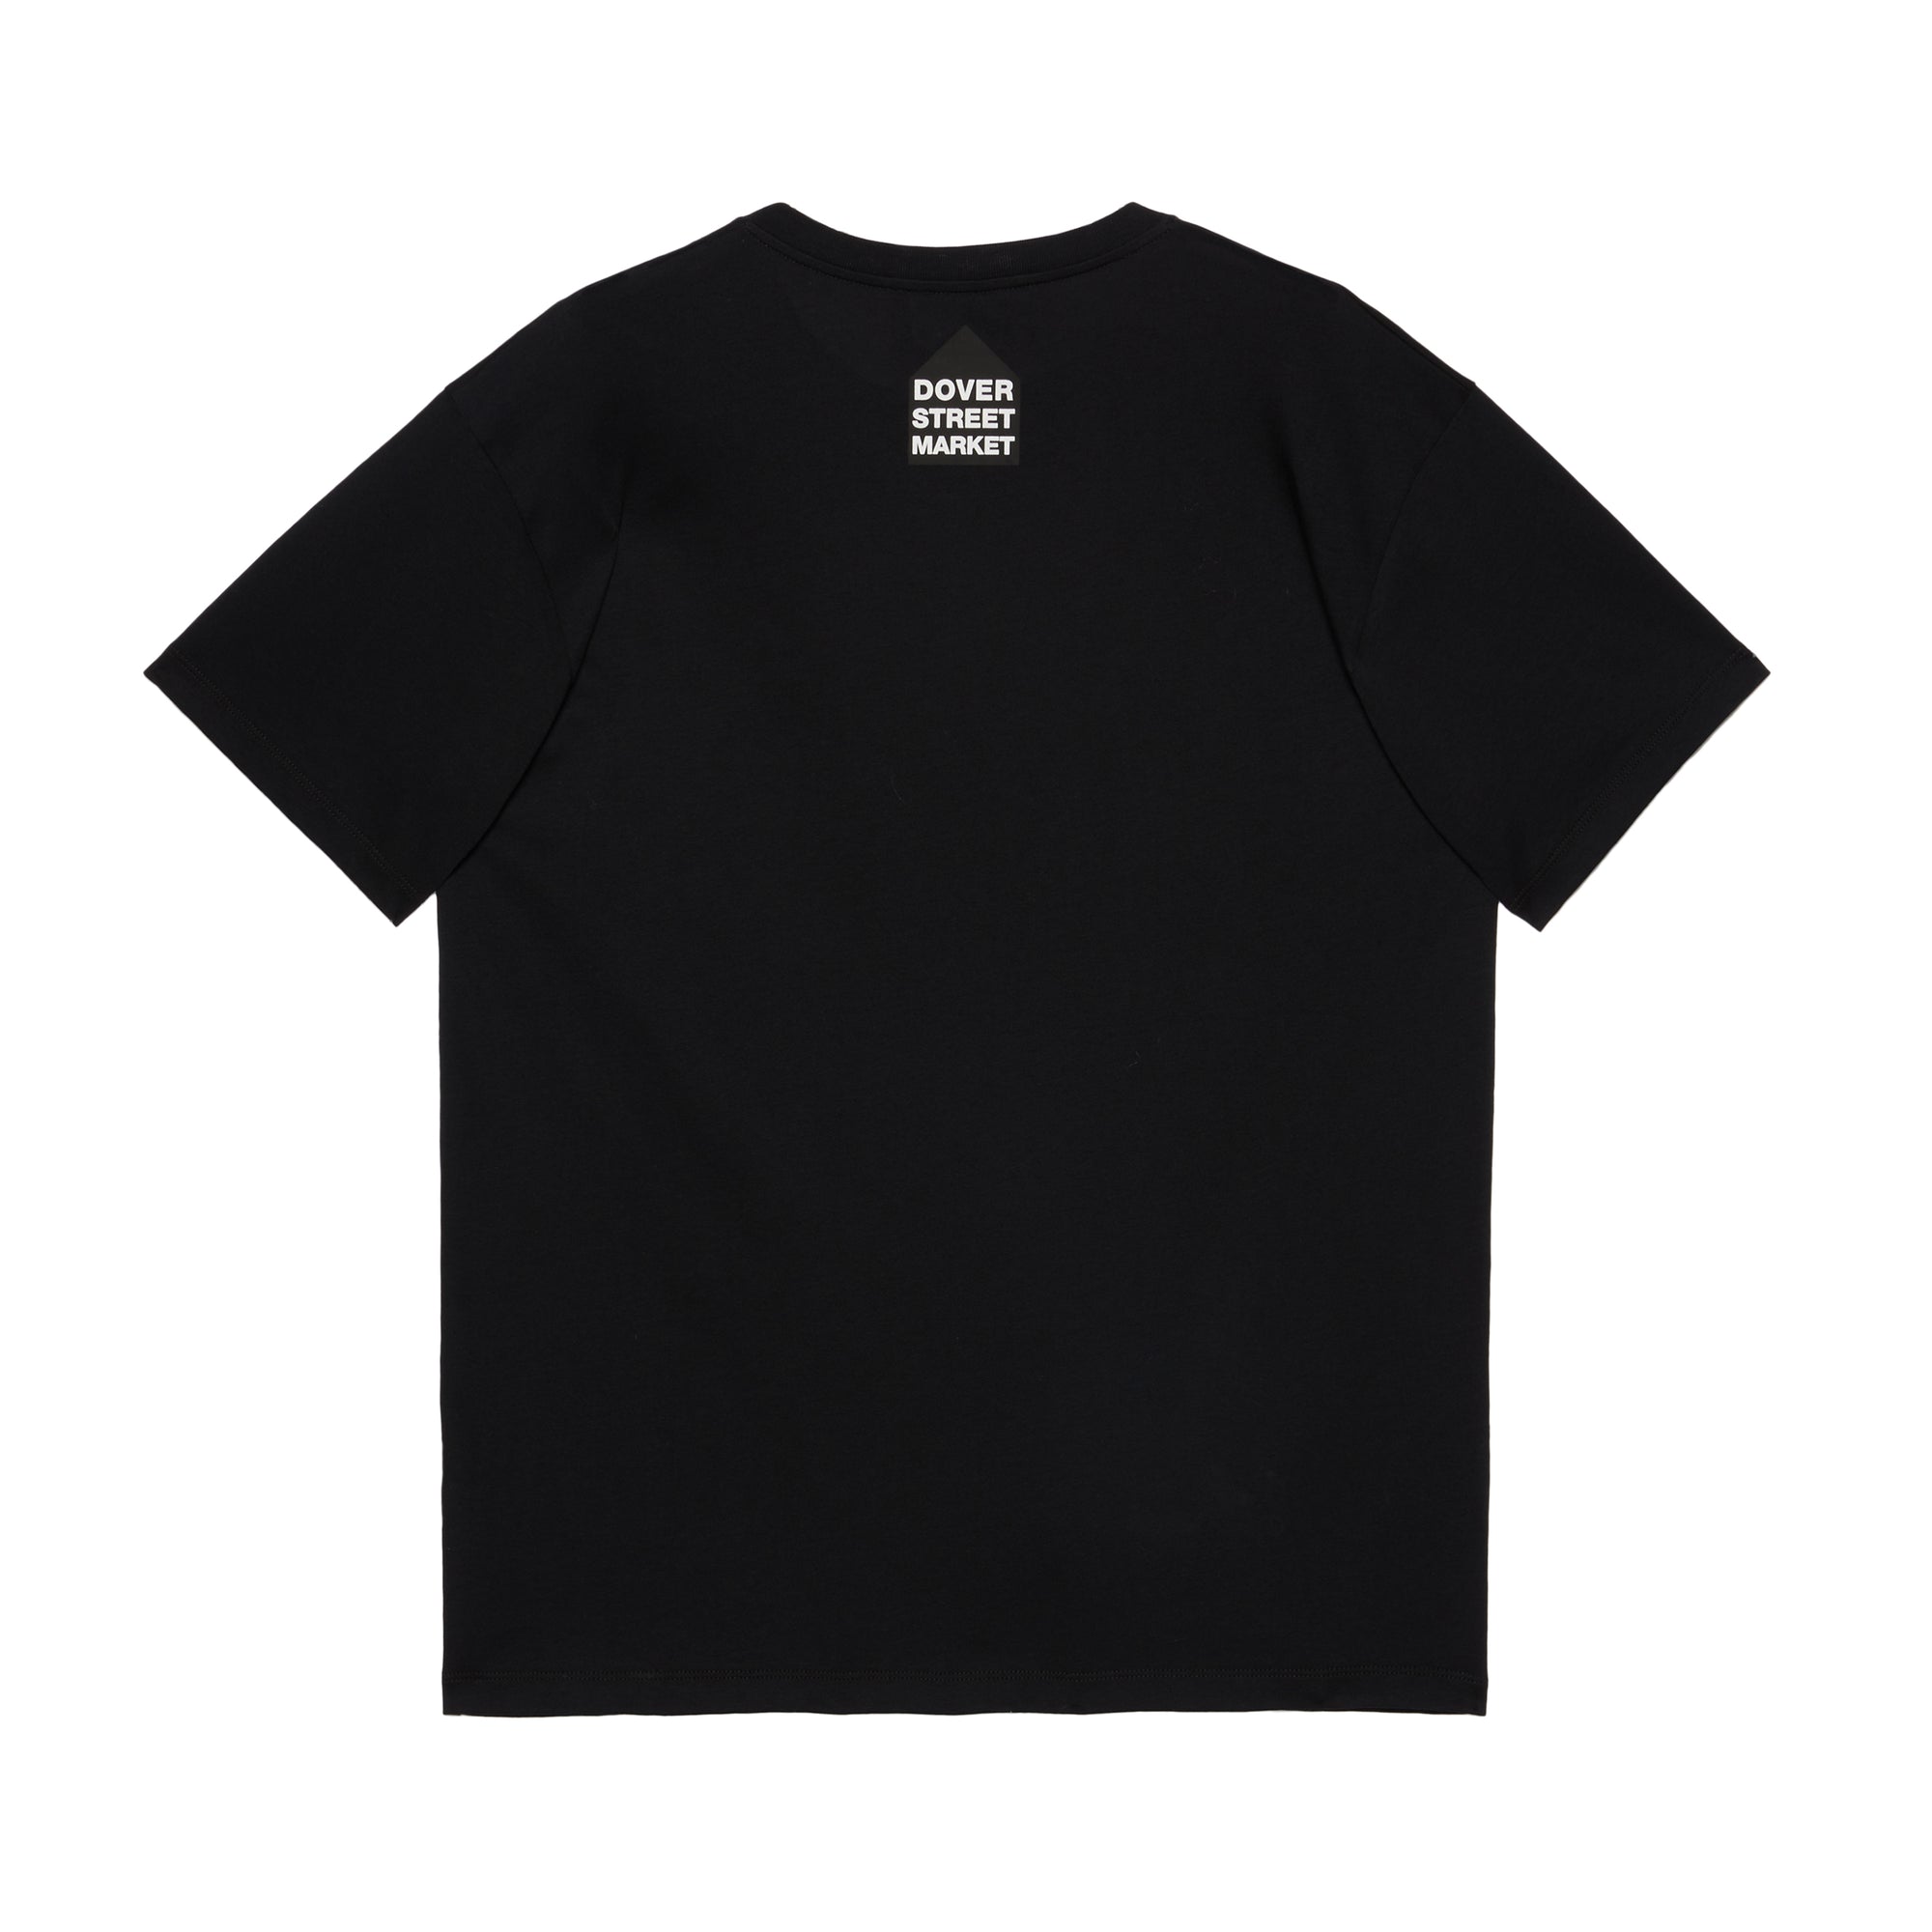 Gucci - Women’s DSM Exclusive T-Shirt - (Black) view 2